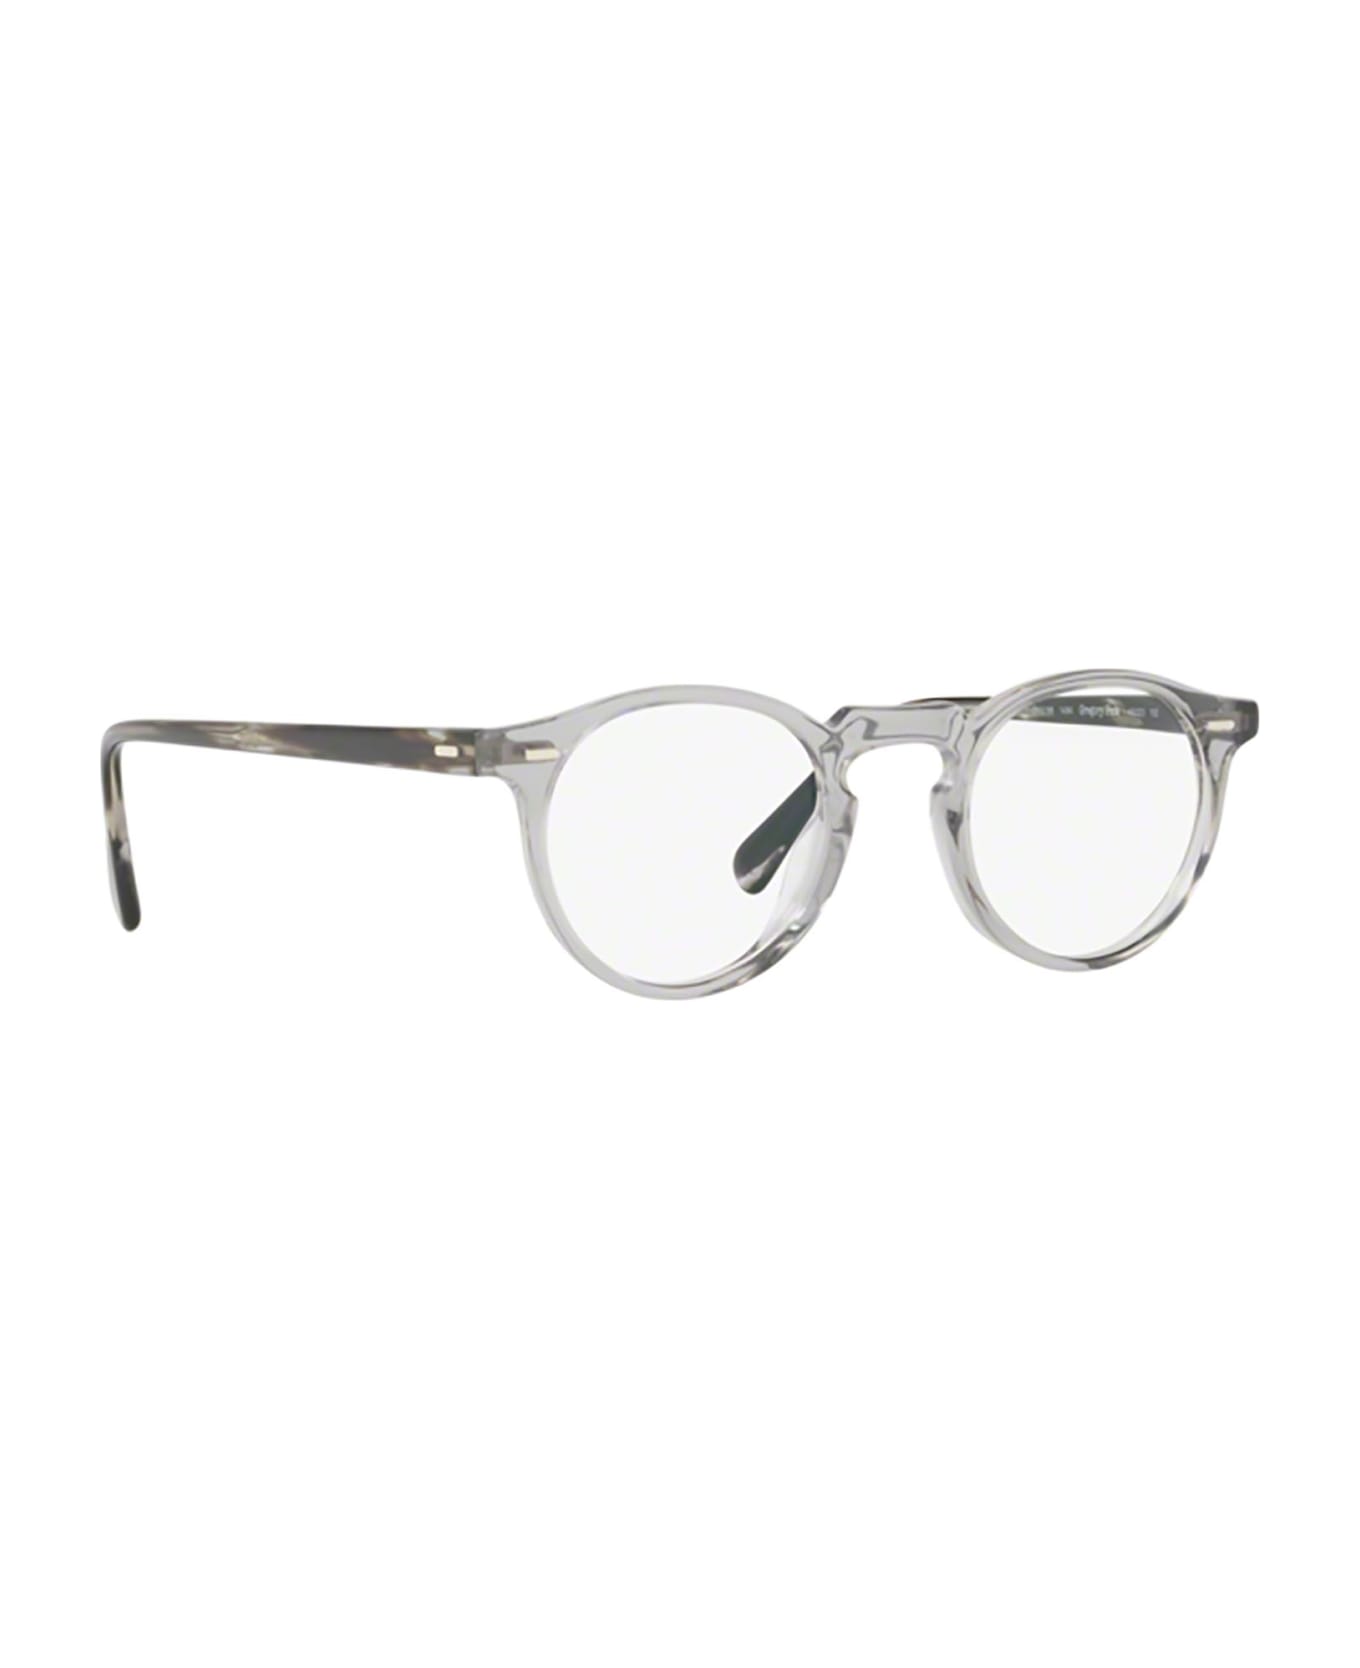 Oliver Peoples Ov5186 Workman Grey Glasses - Workman Grey